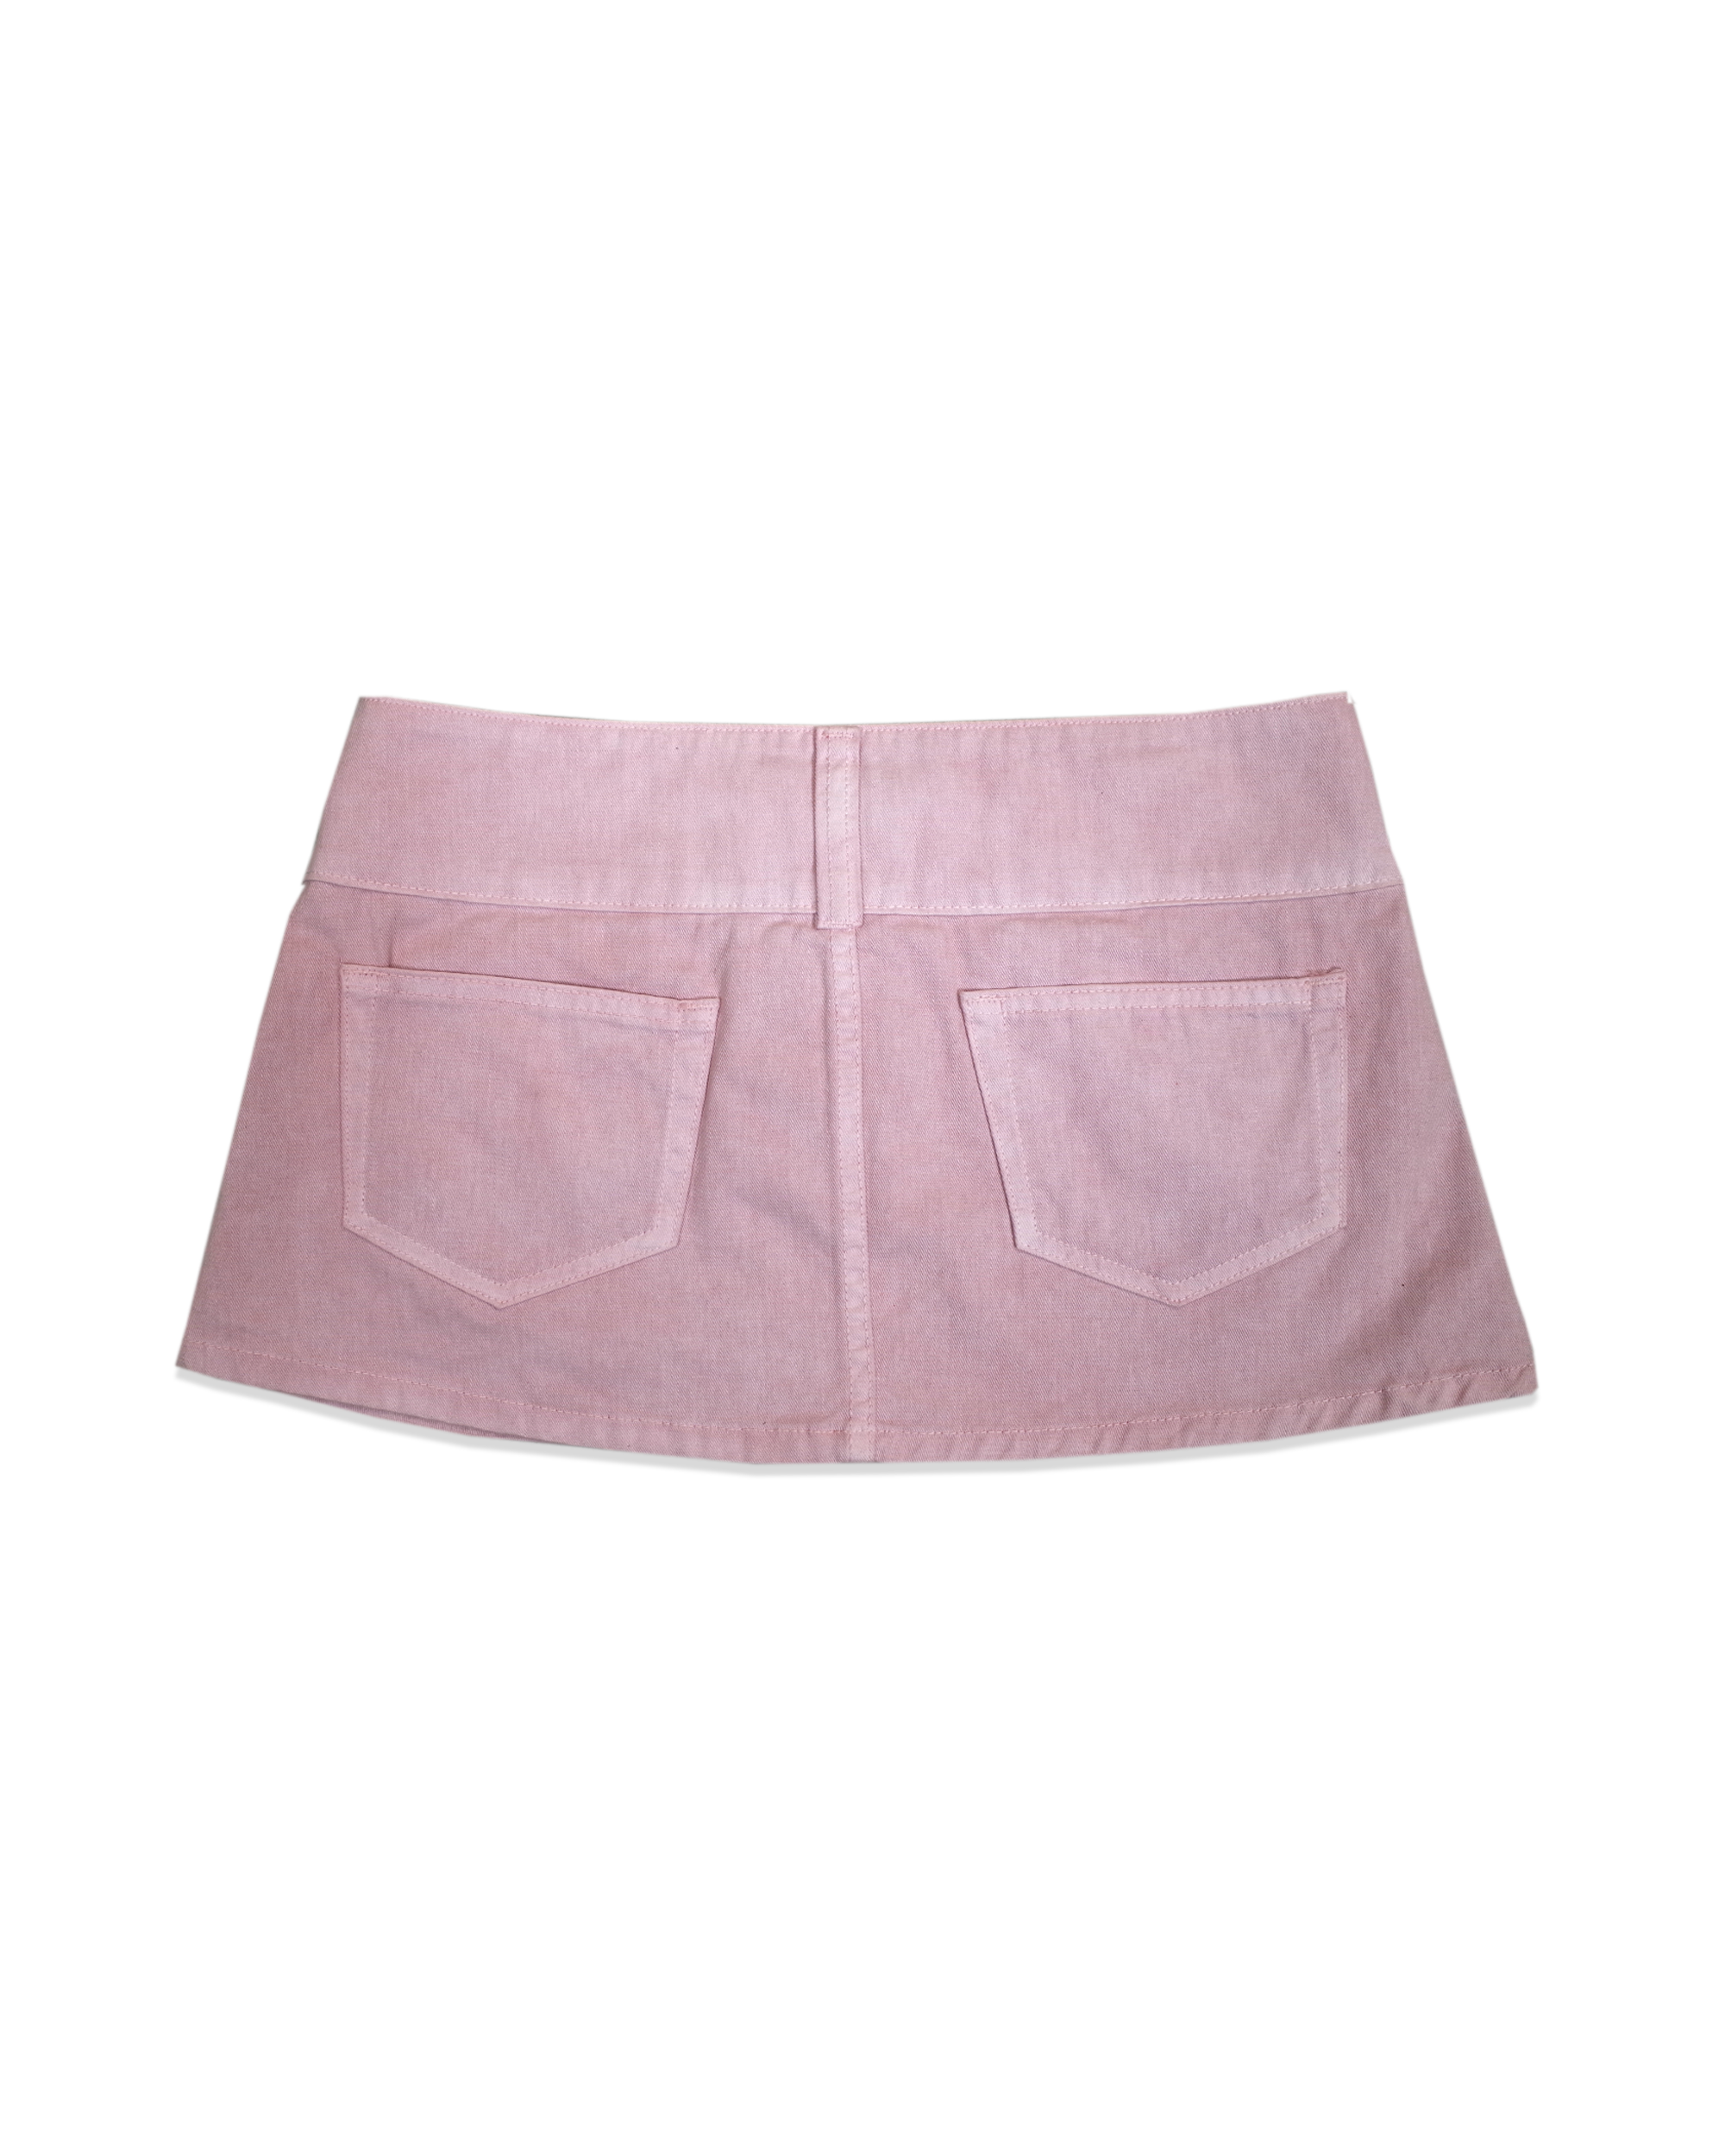 Baby Pink Mini Skirt from Juliet Johnstone